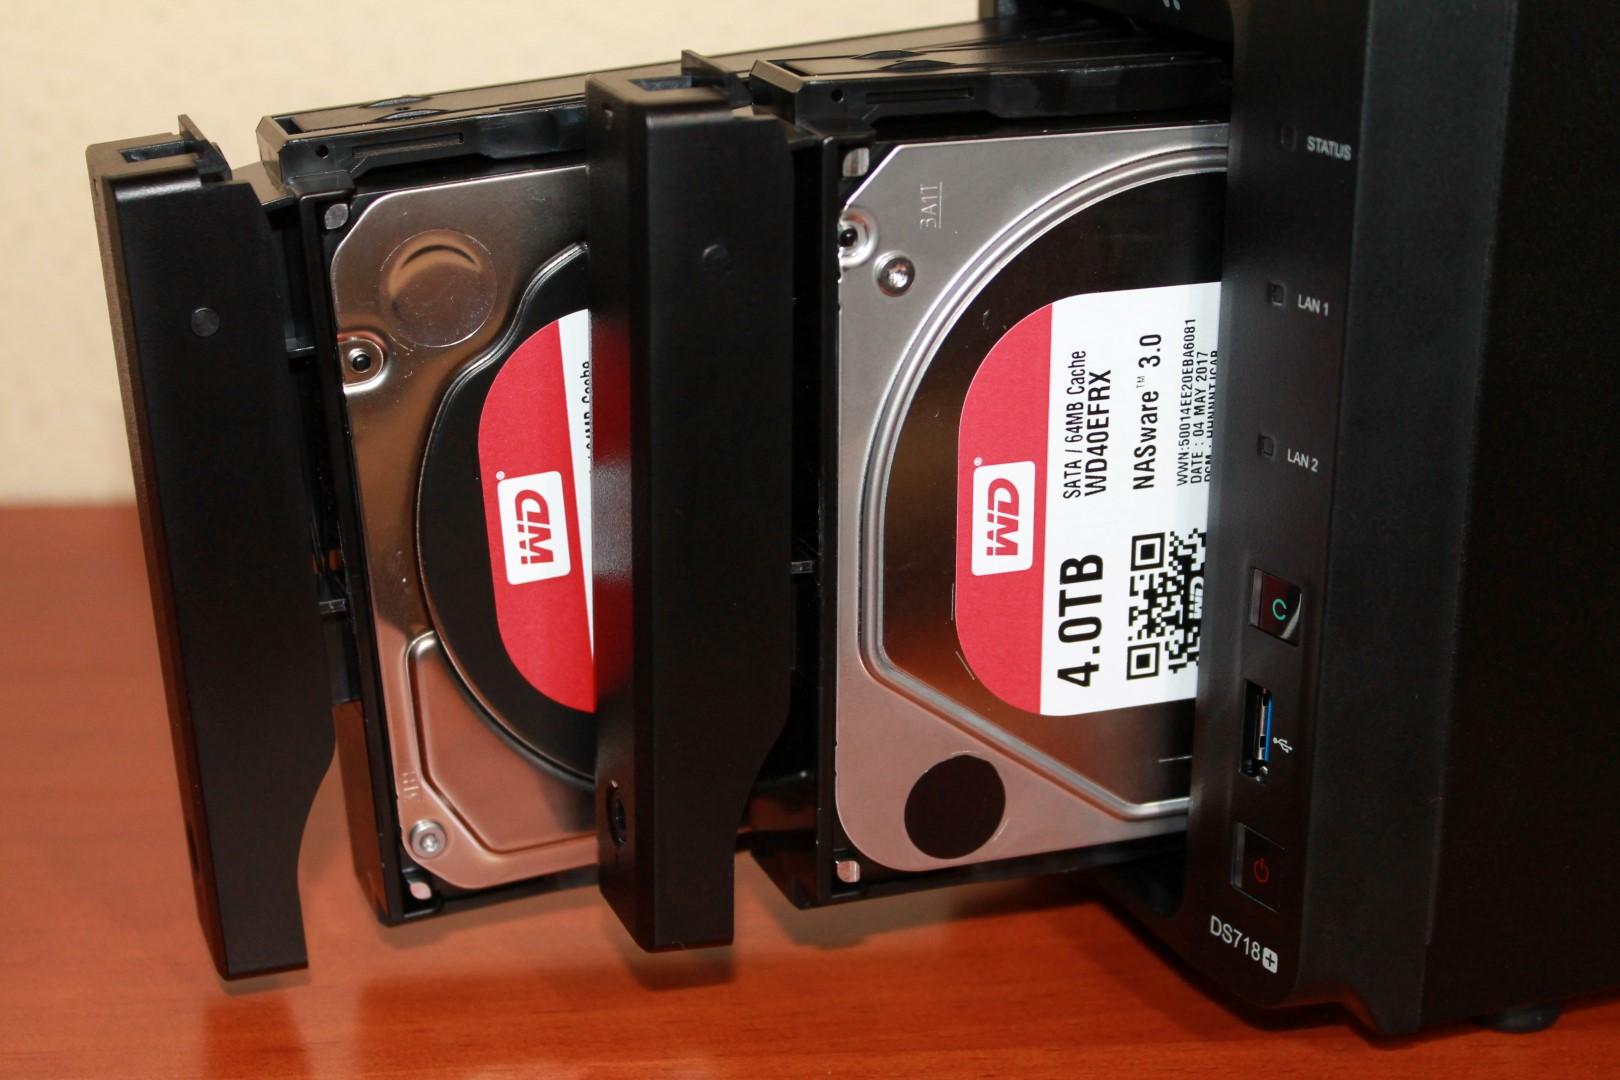 Prueba discos duros WD Red en Synology DS718+